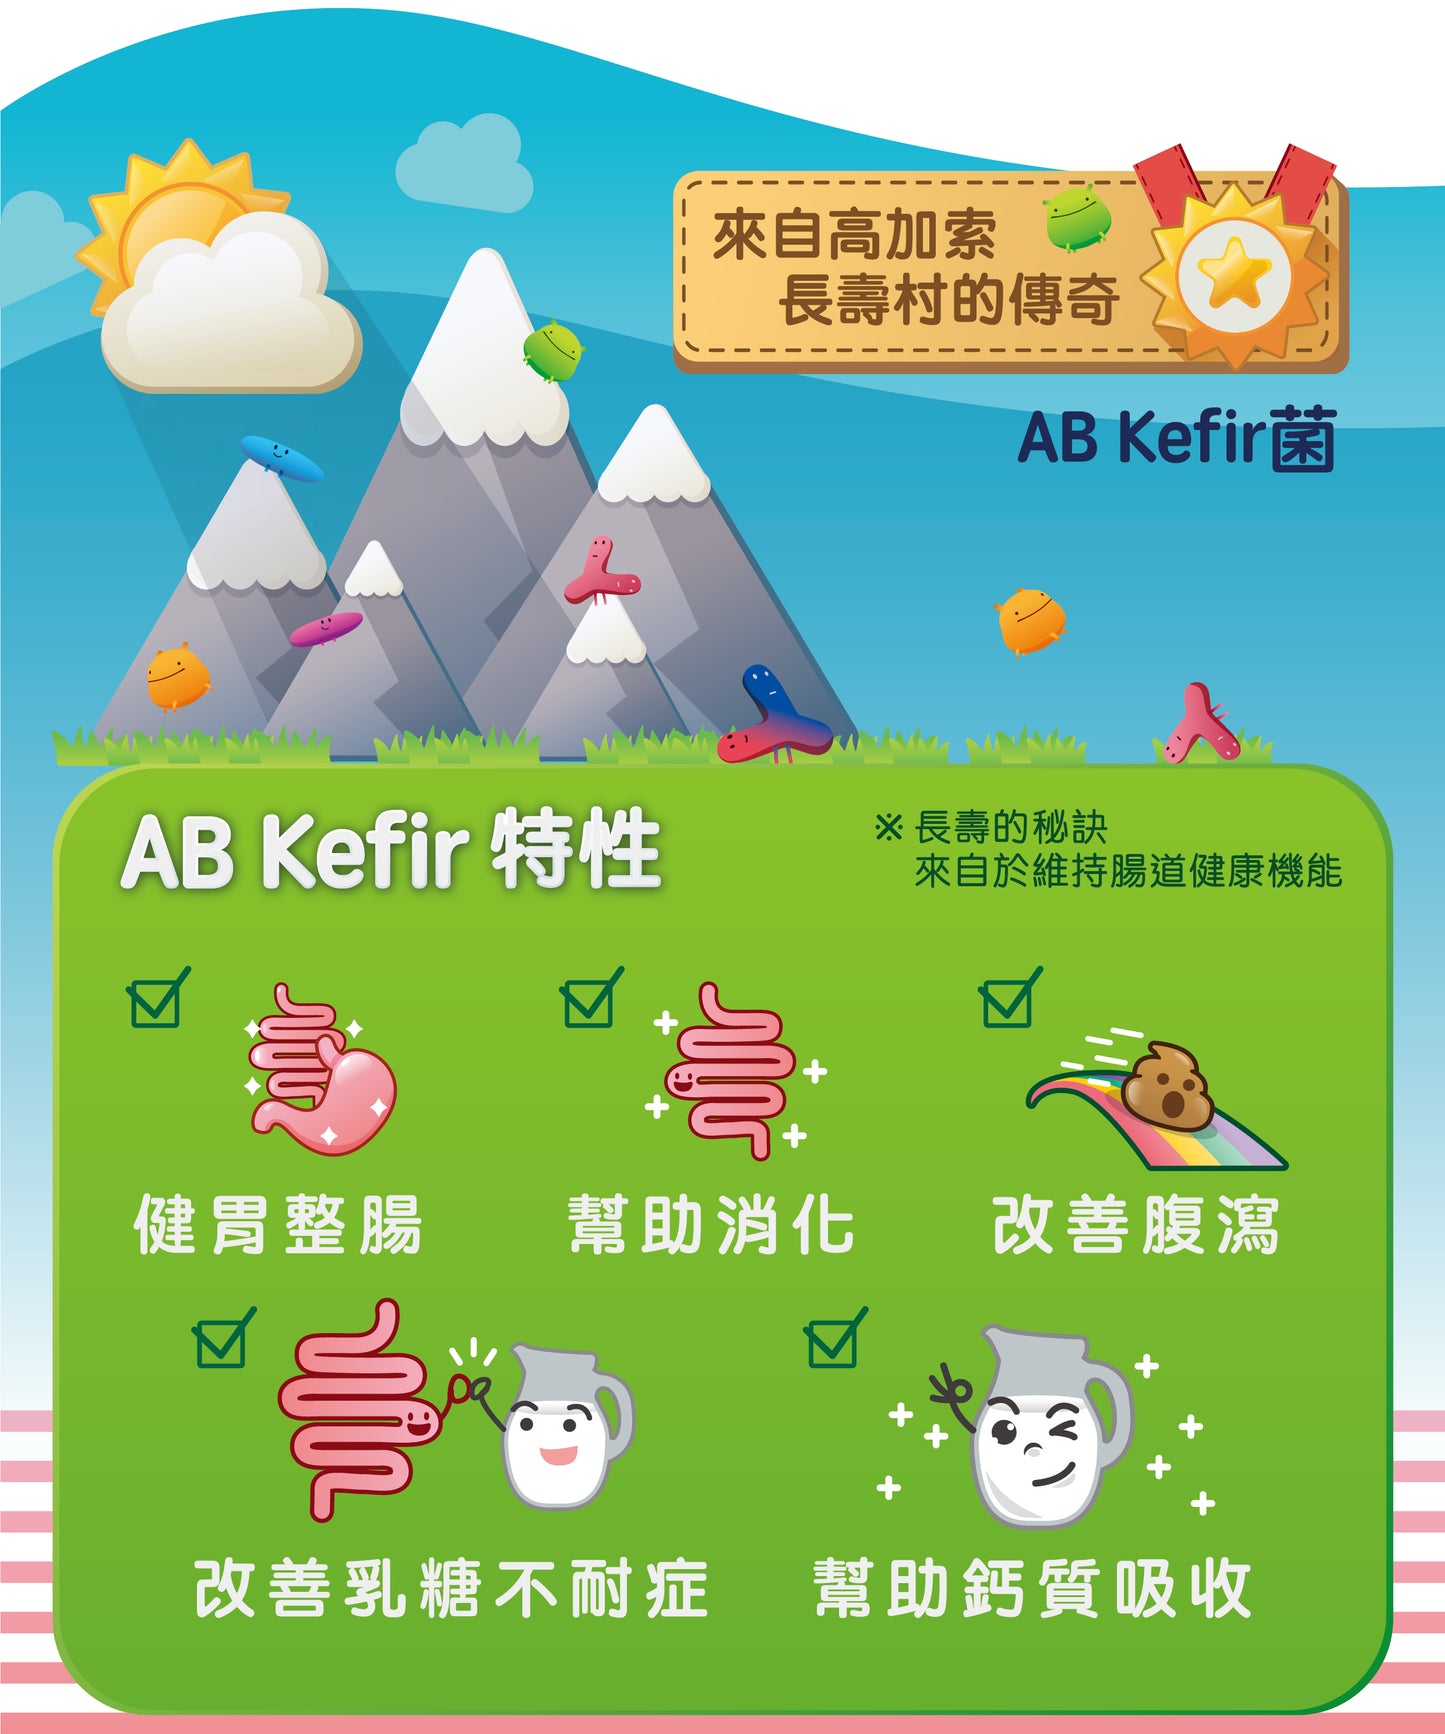 【Urbios】AB Kefir embeds patented probiotics (30 packs in a box)